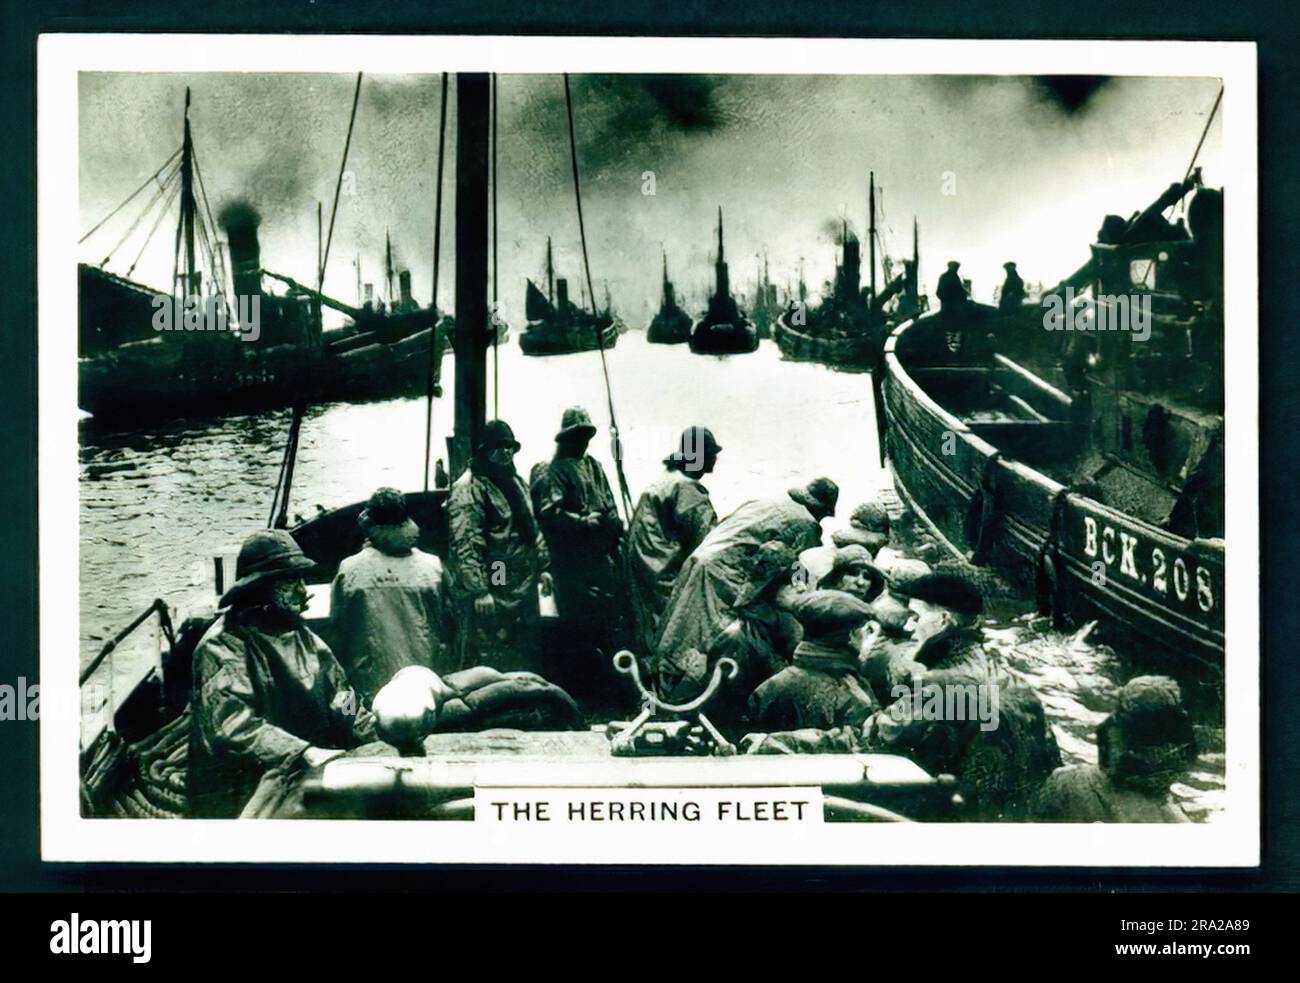 Yarmouth Fishing Fleet - Vintage Cigarette Card Stock Photo